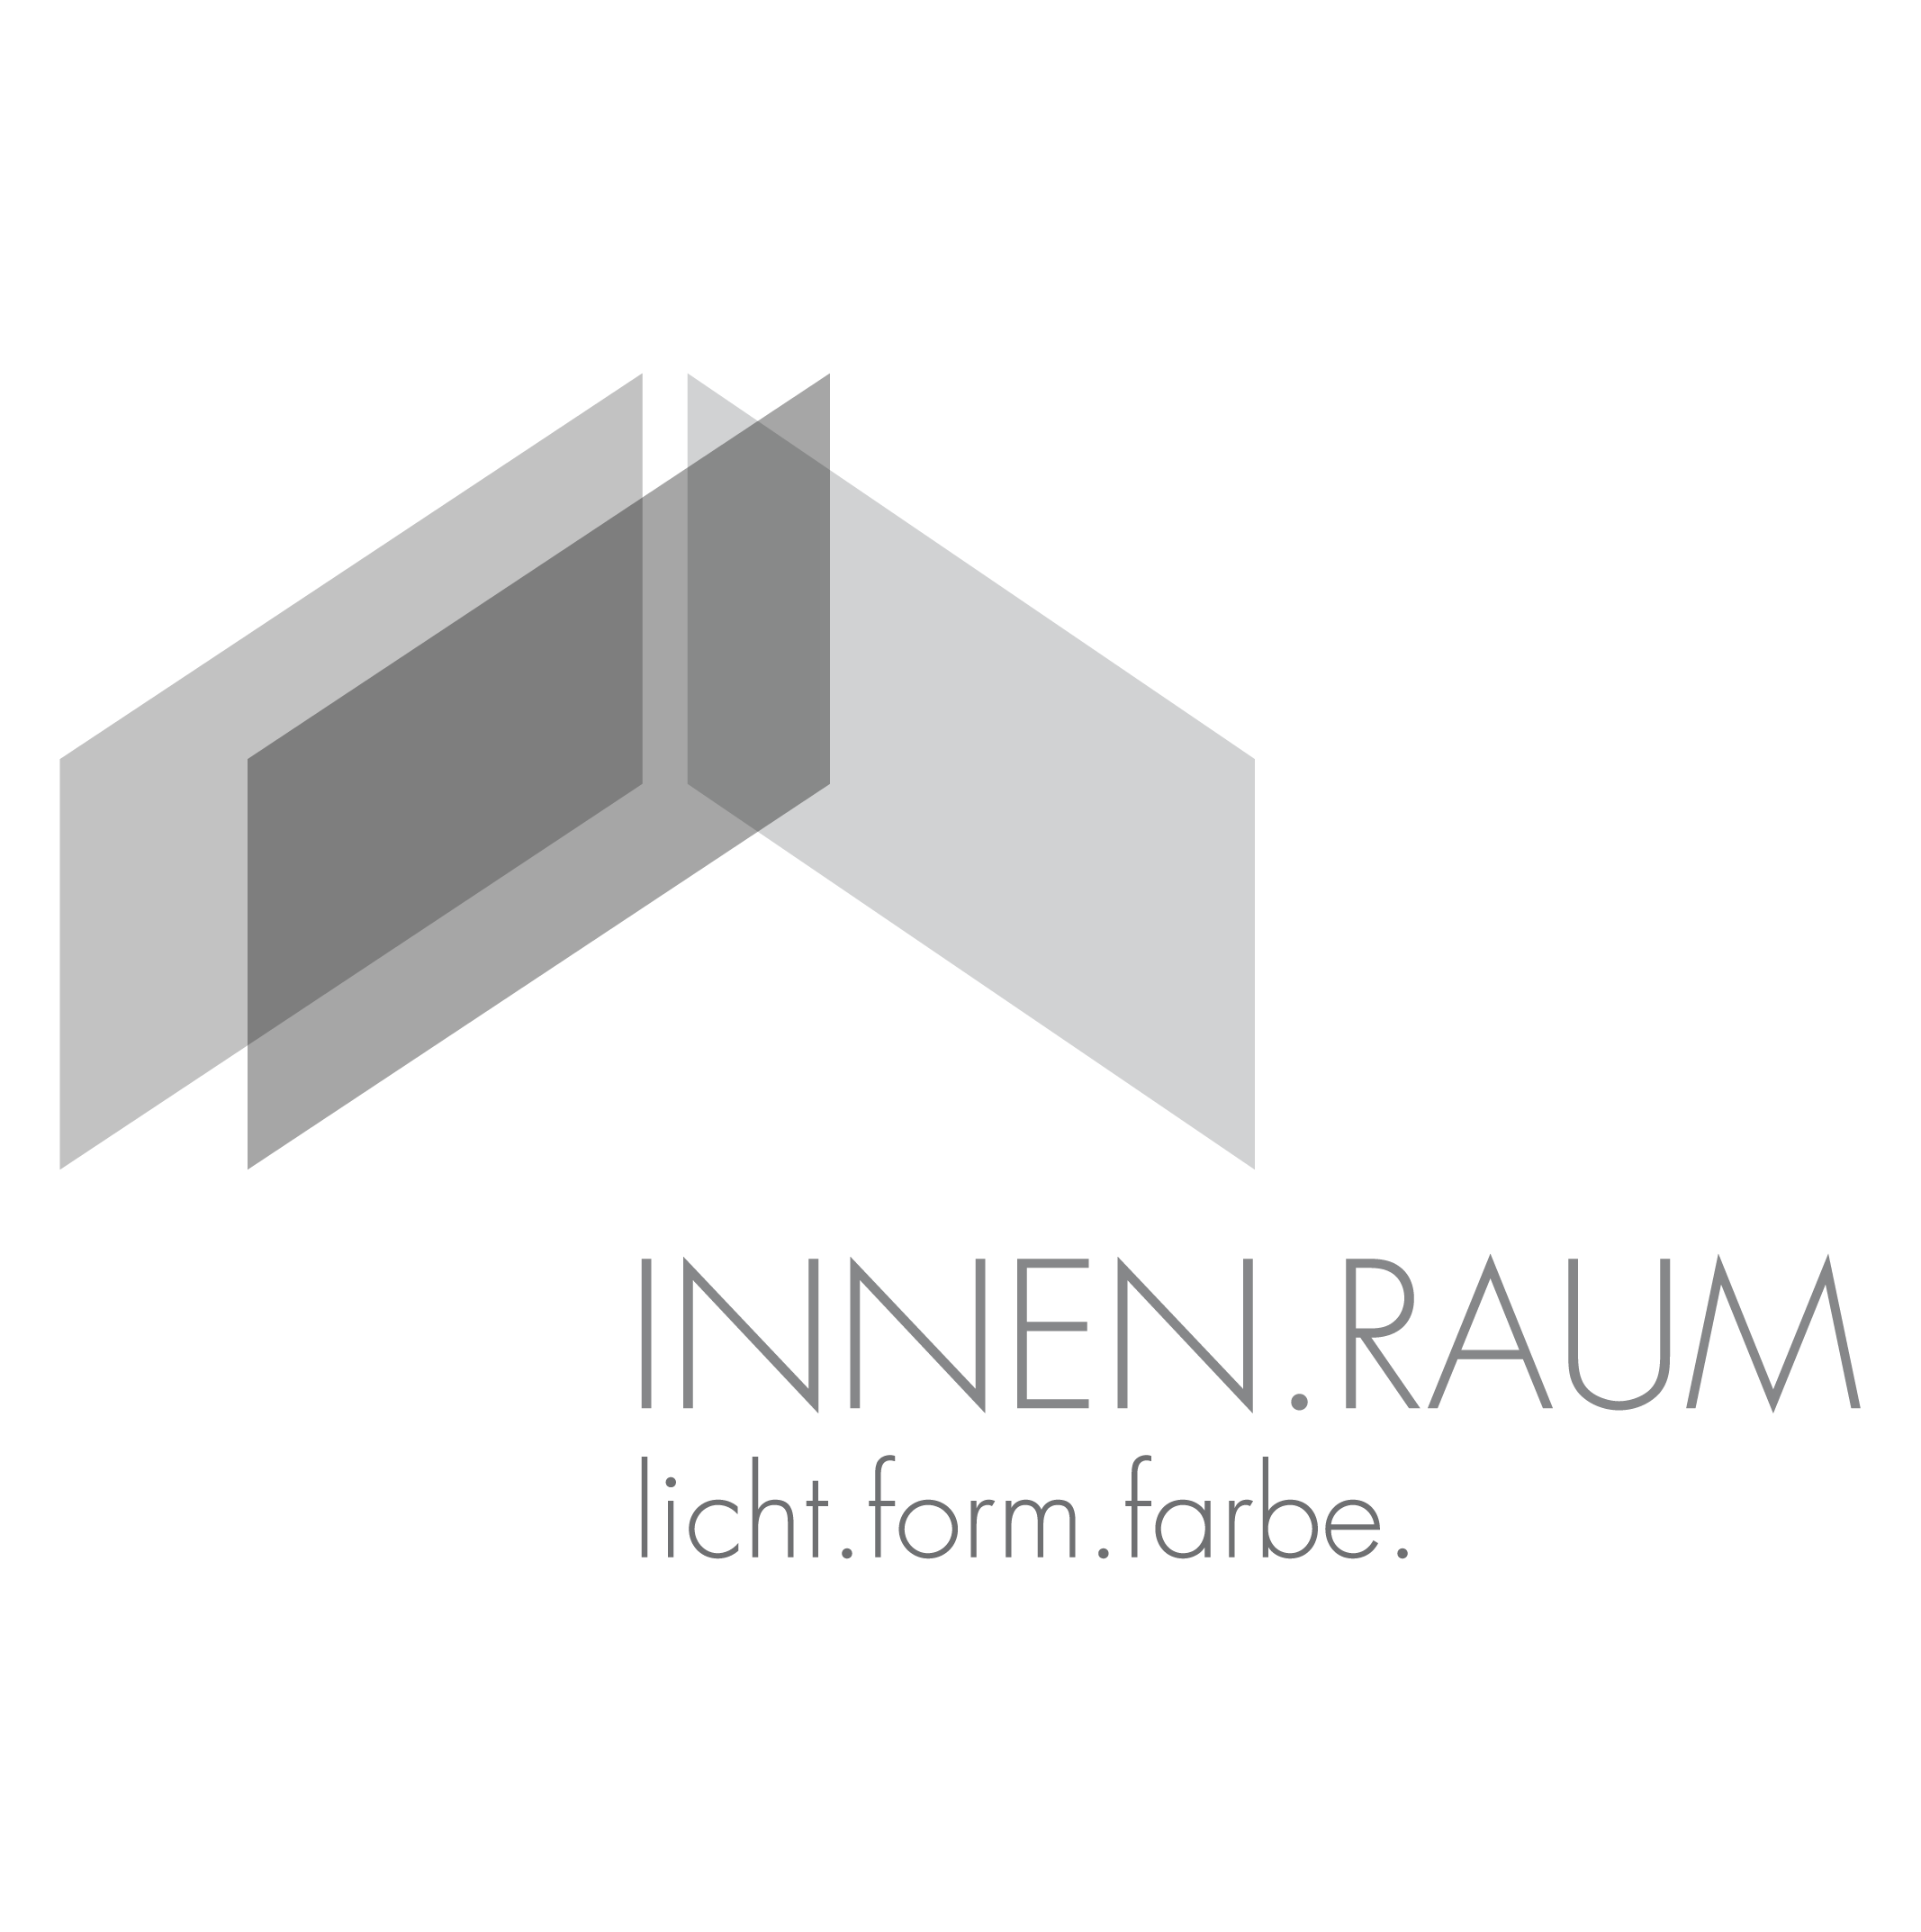 (c) Innen-raum.ch